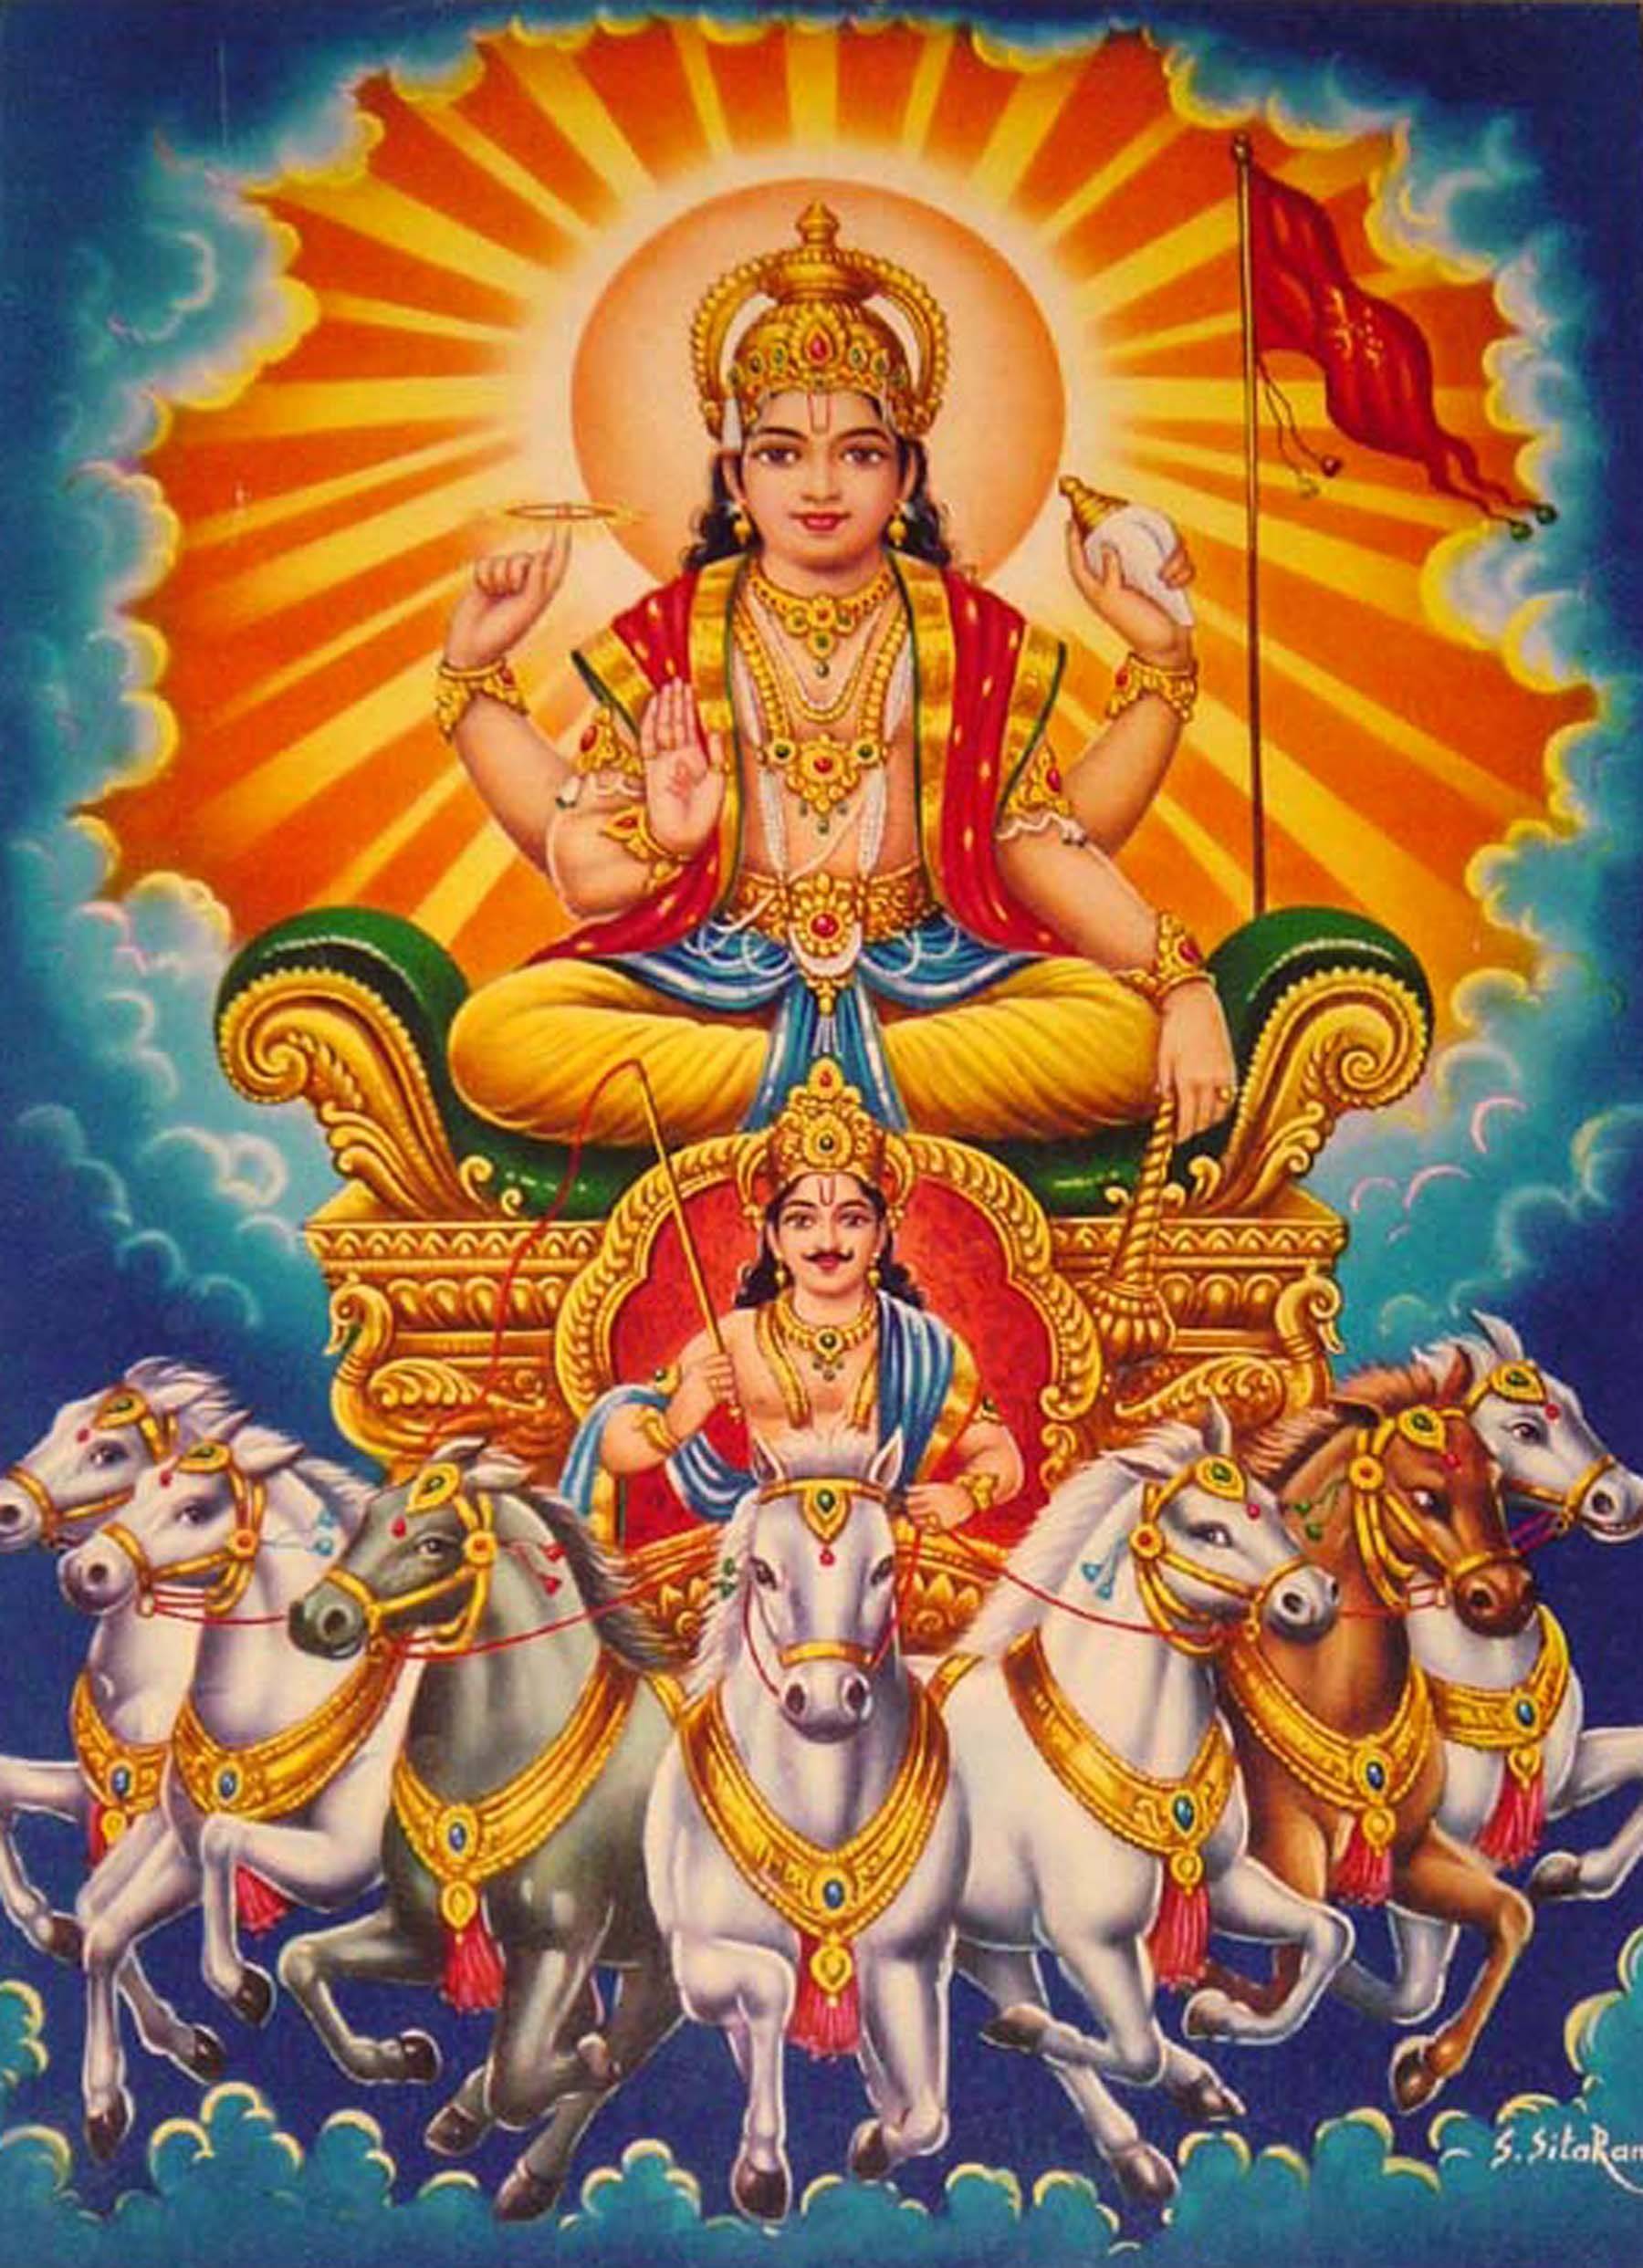 Сурья - бог солнца, света и мудрости